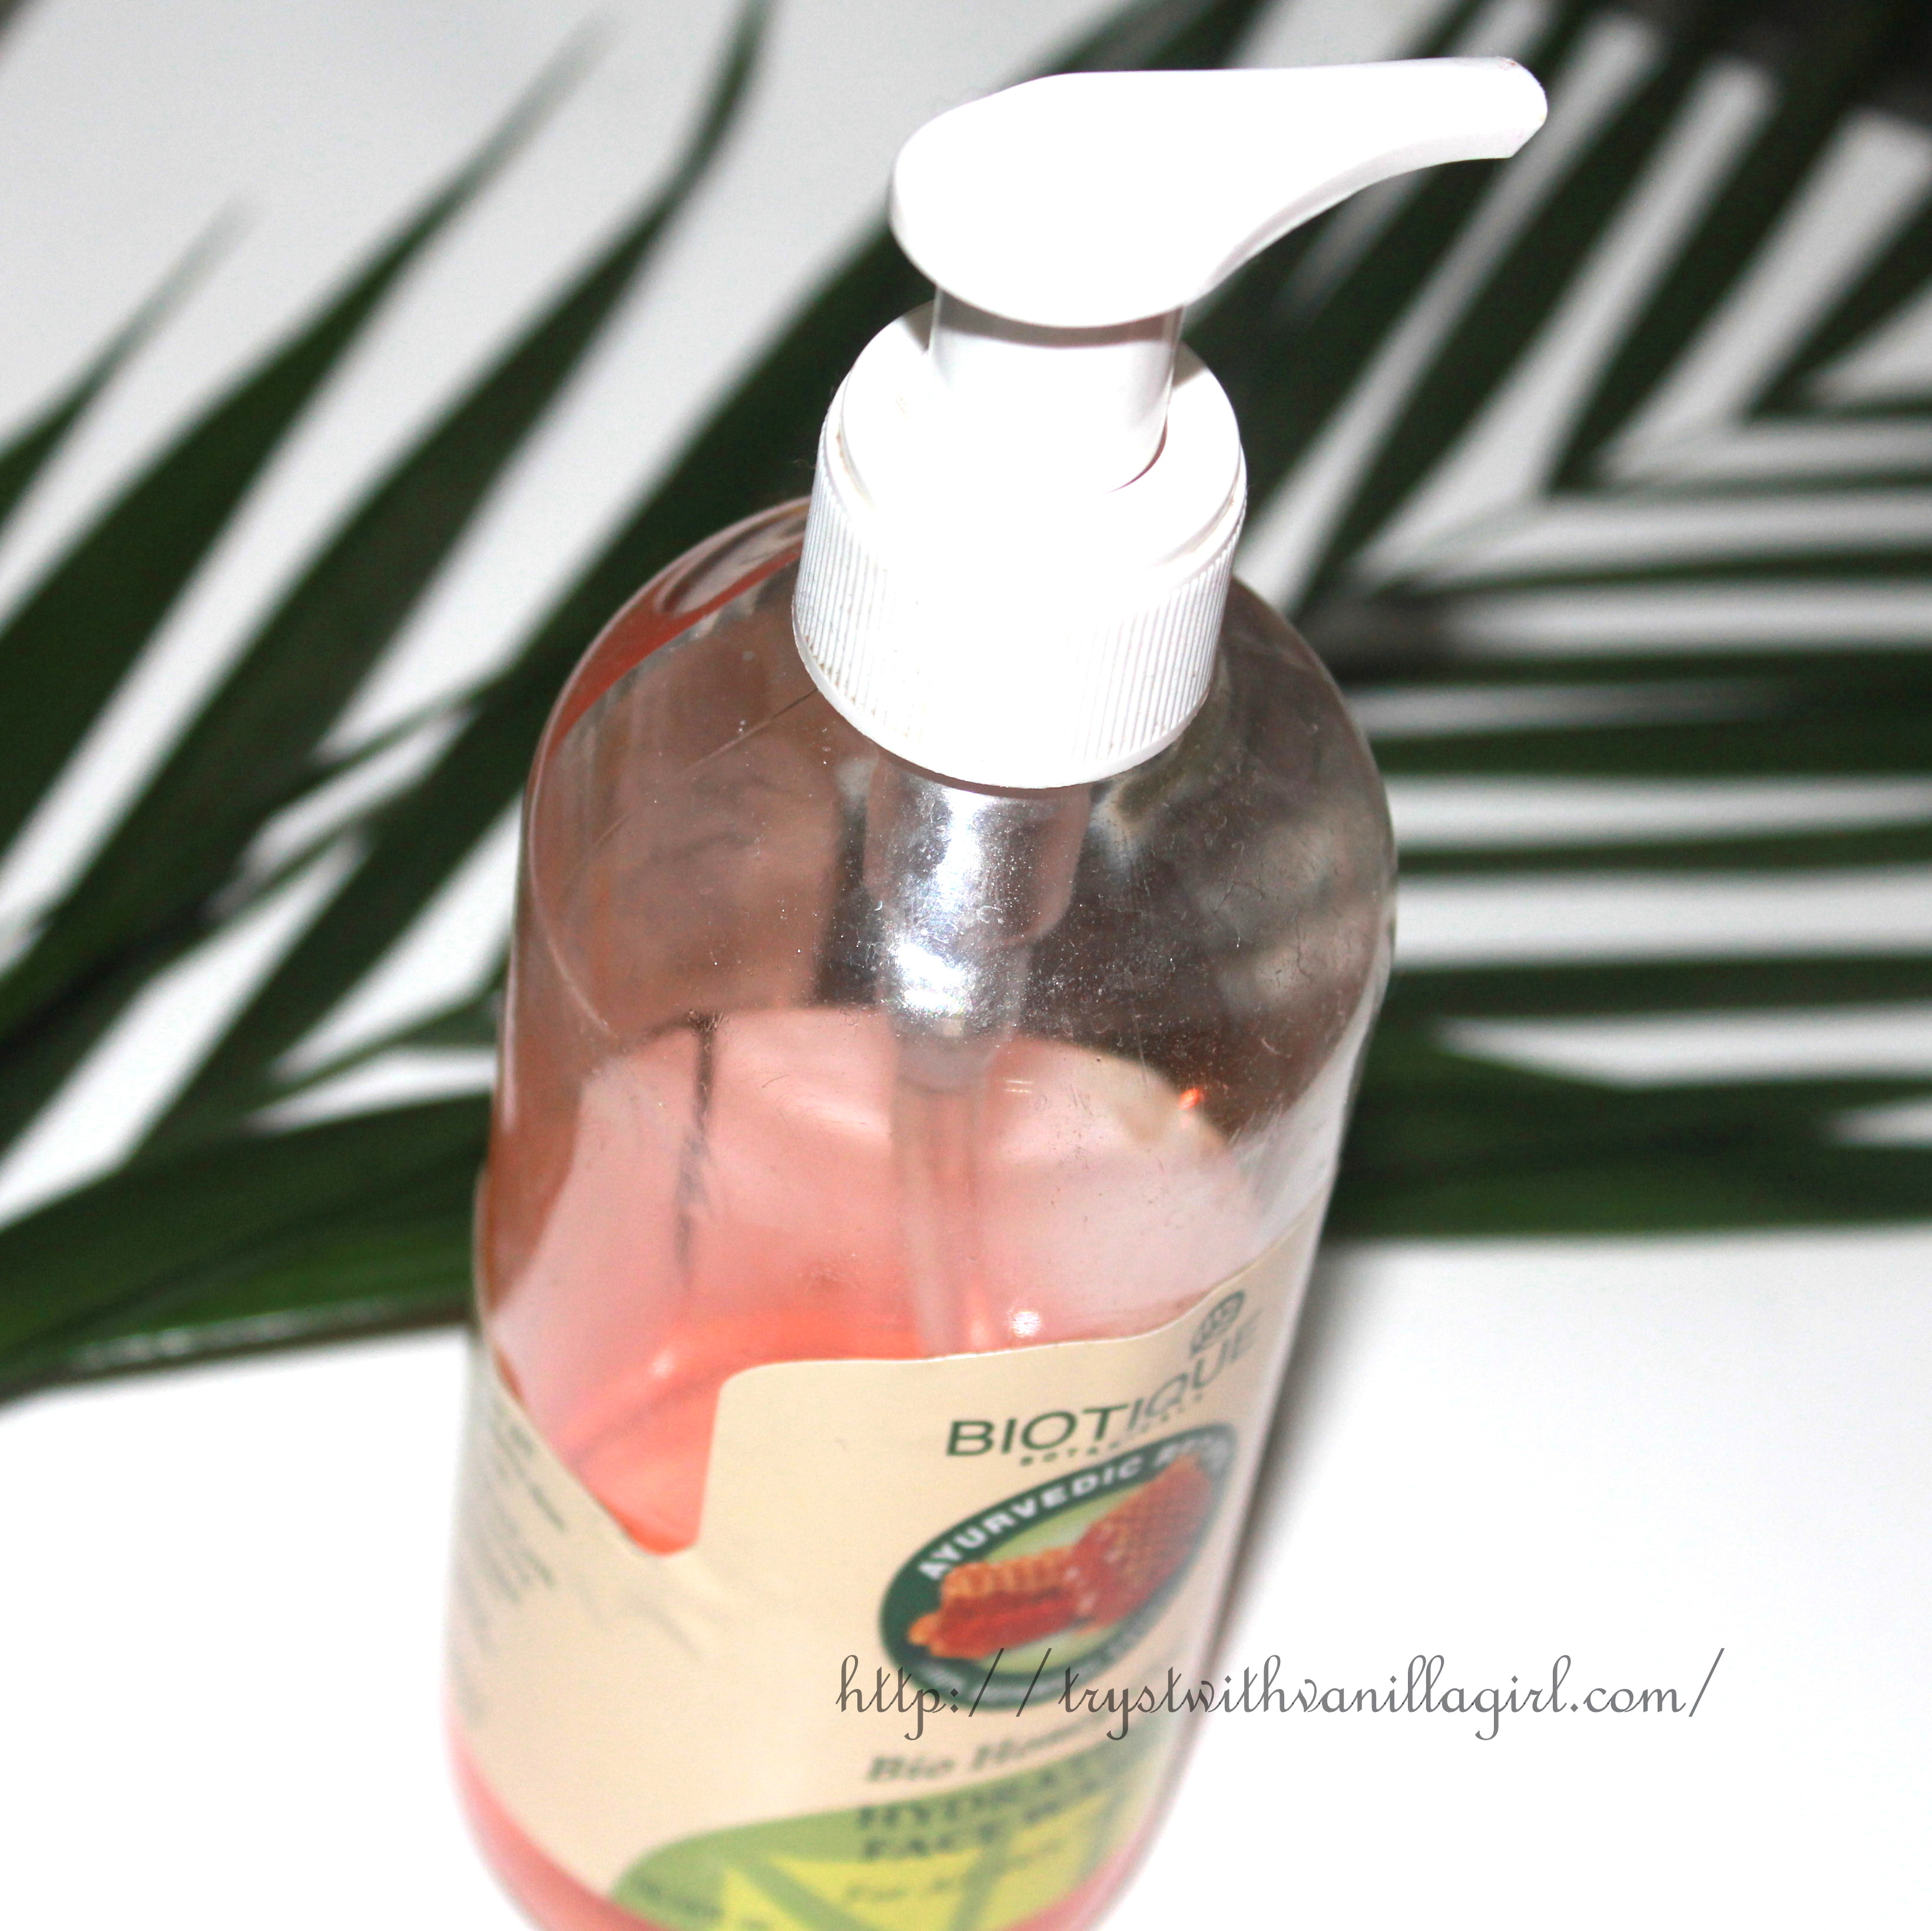 BIOTIQUE Bio Honey Gel Hydrating Face Wash Review